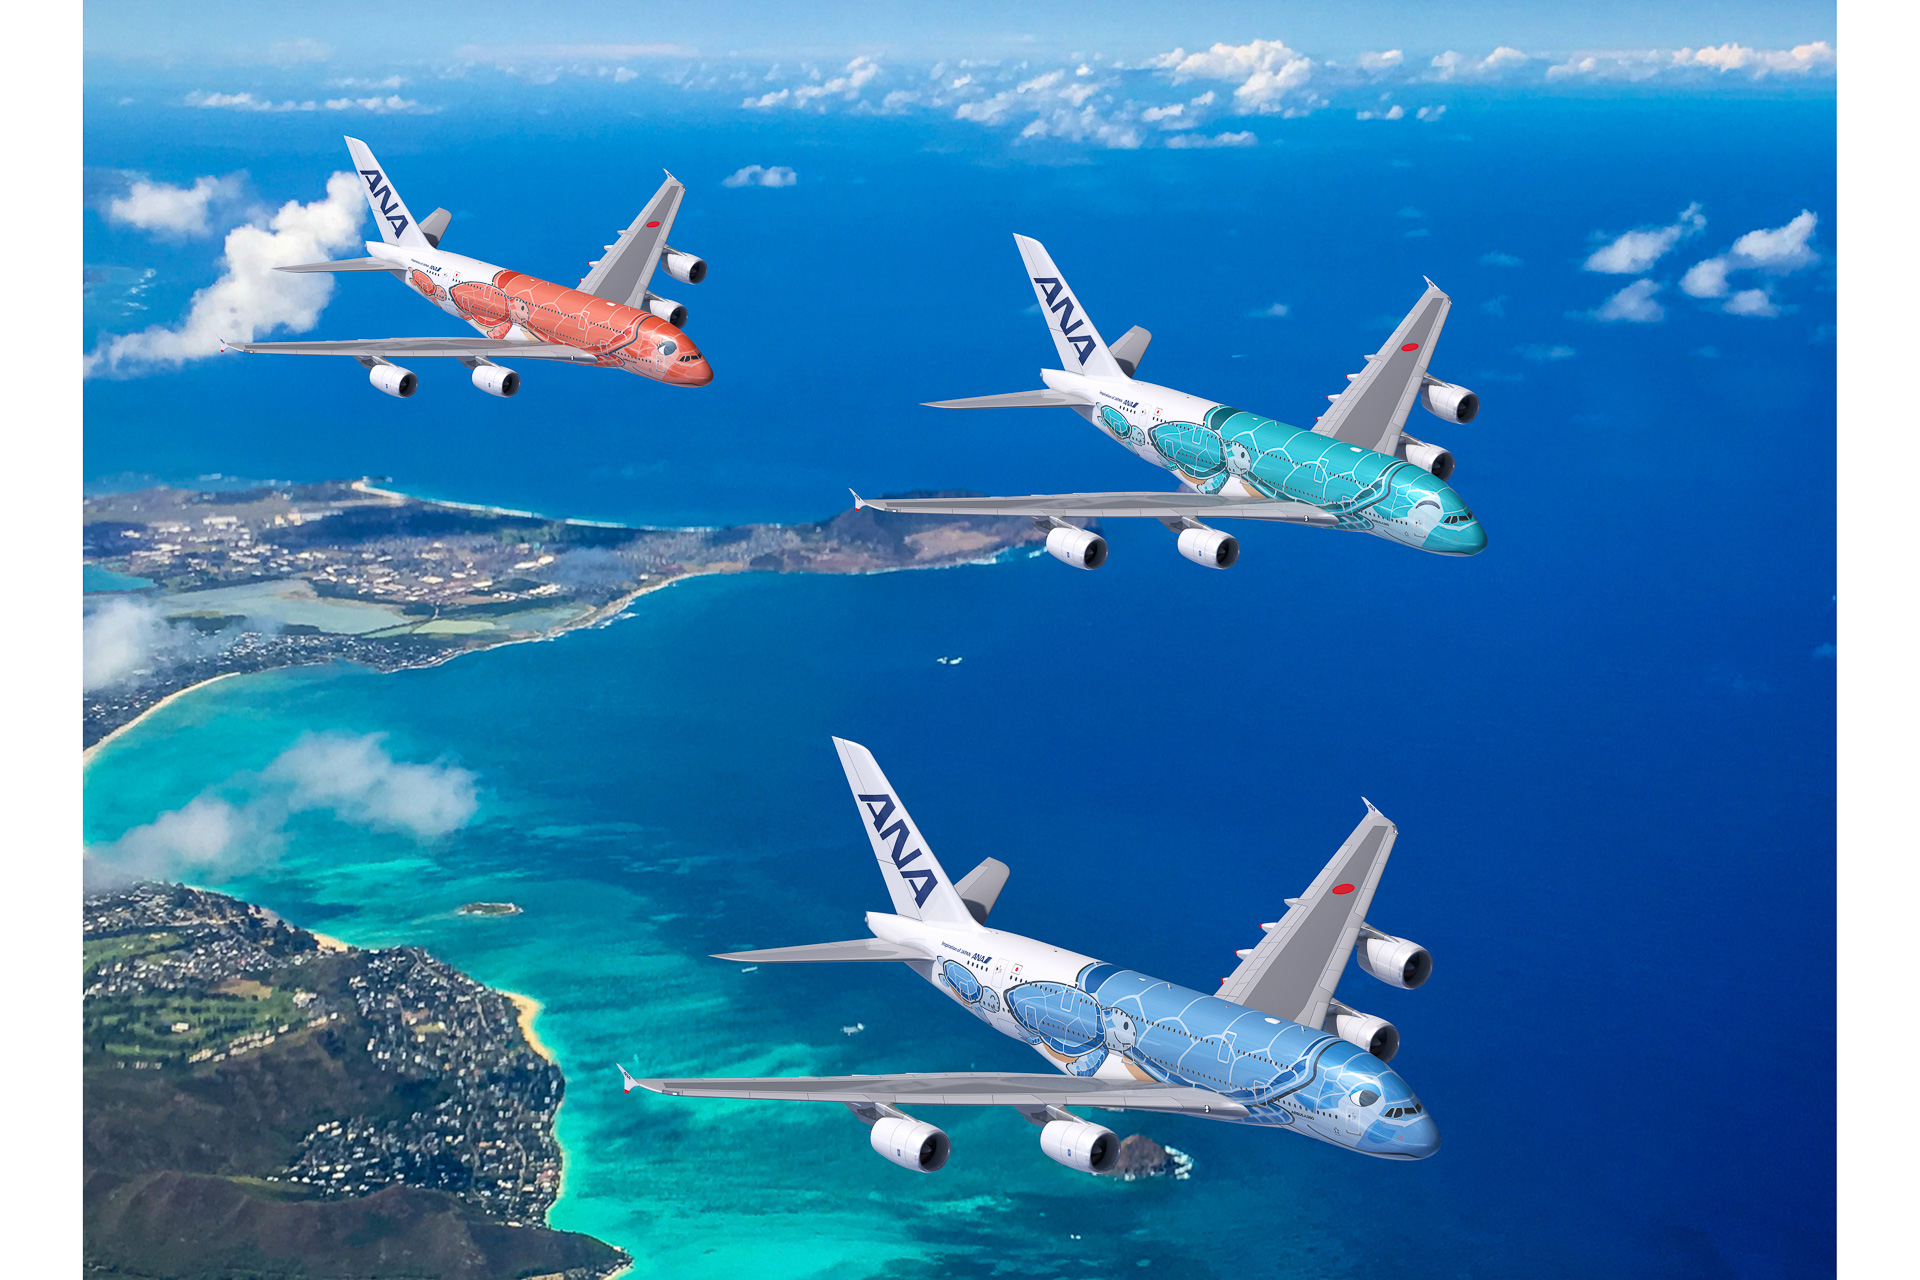 Ana エアバス A380型機 のデザイン3種など発表 座席数は5席 19年春にハワイ路線就航予定 トラベル Watch